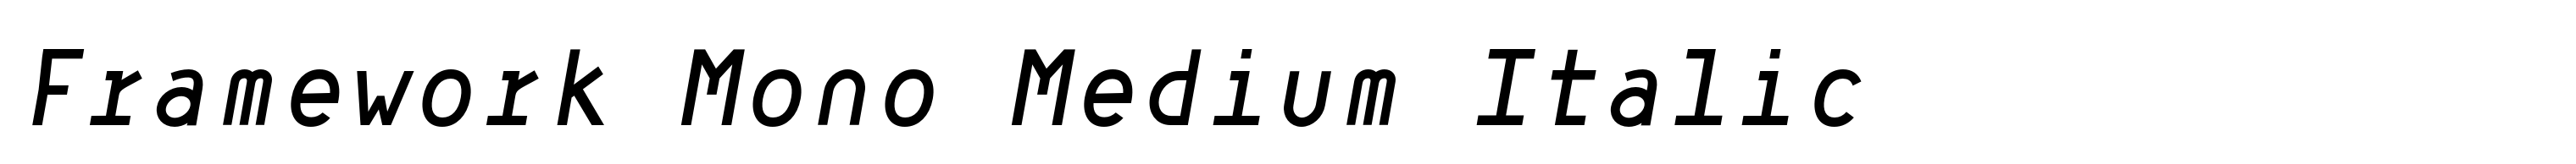 Framework Mono Medium Italic